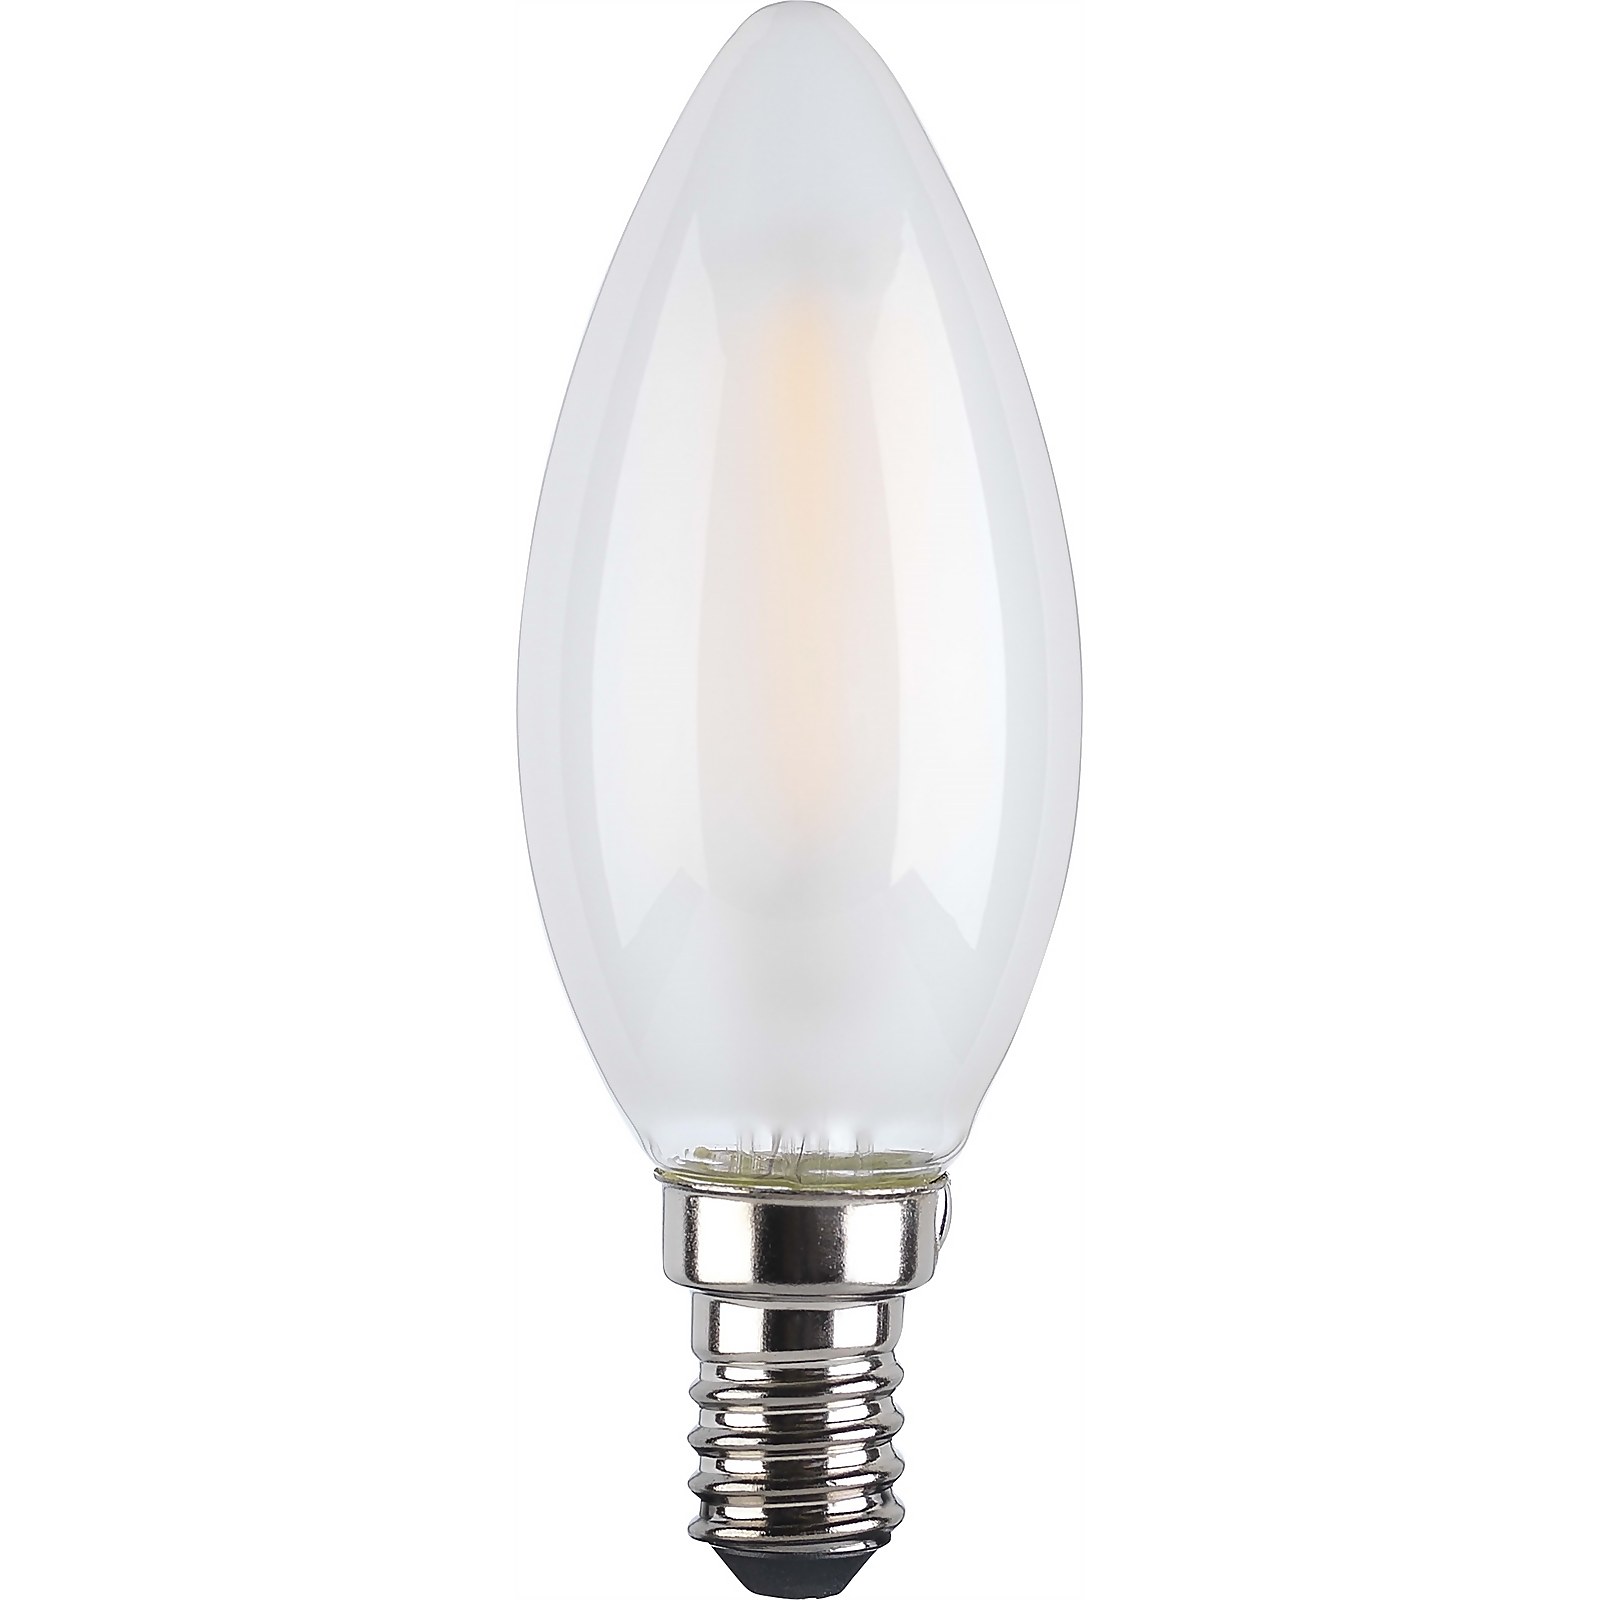 TCP Lightbulbs Filament Candle 60W SES Daylight